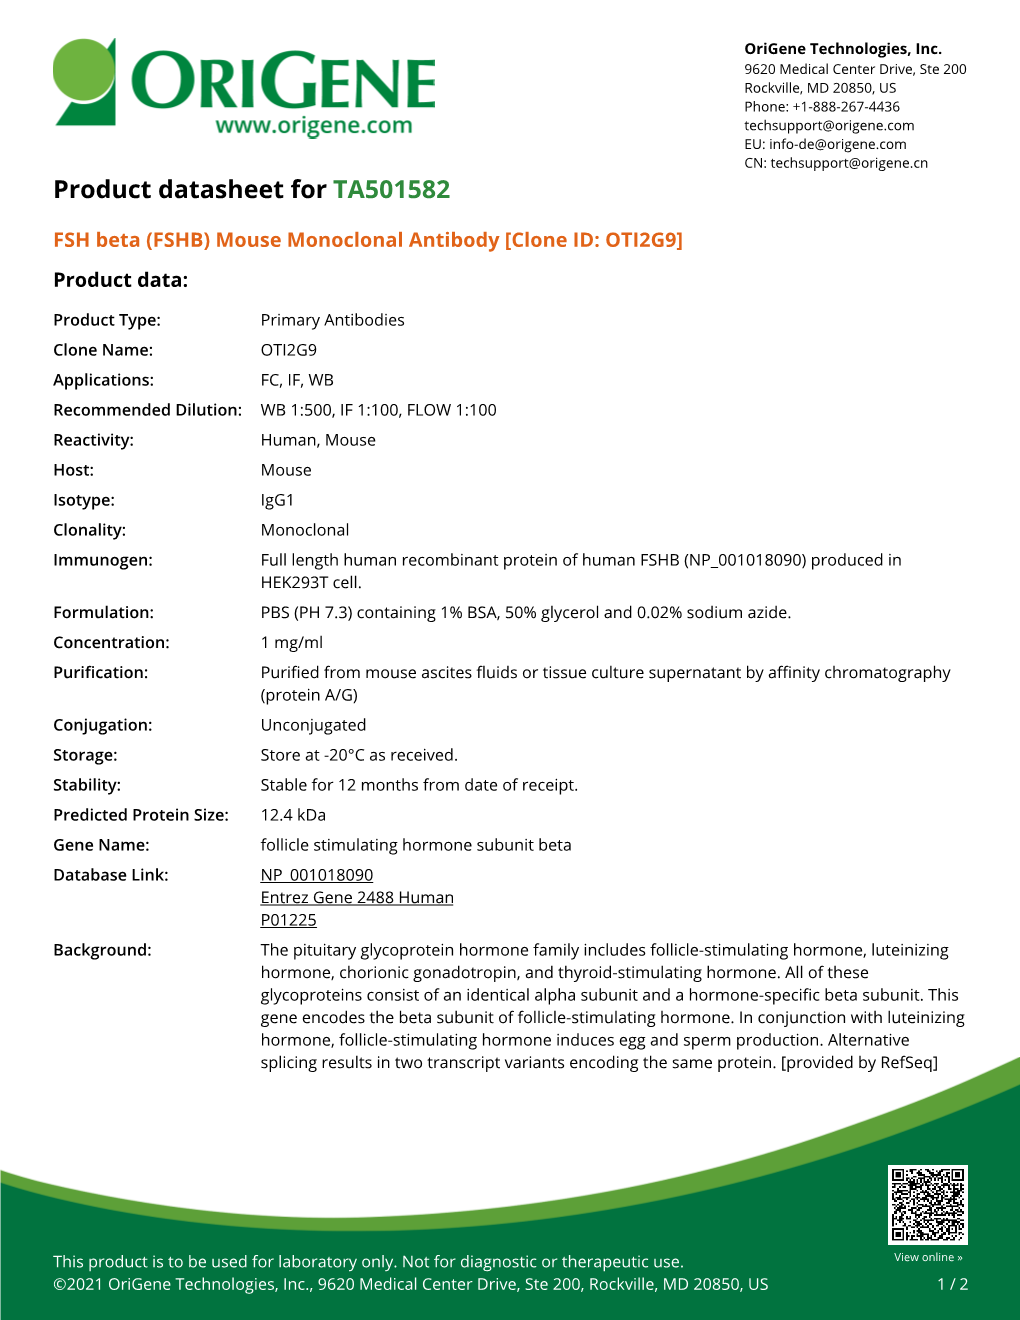 FSH Beta (FSHB) Mouse Monoclonal Antibody [Clone ID: OTI2G9] Product Data